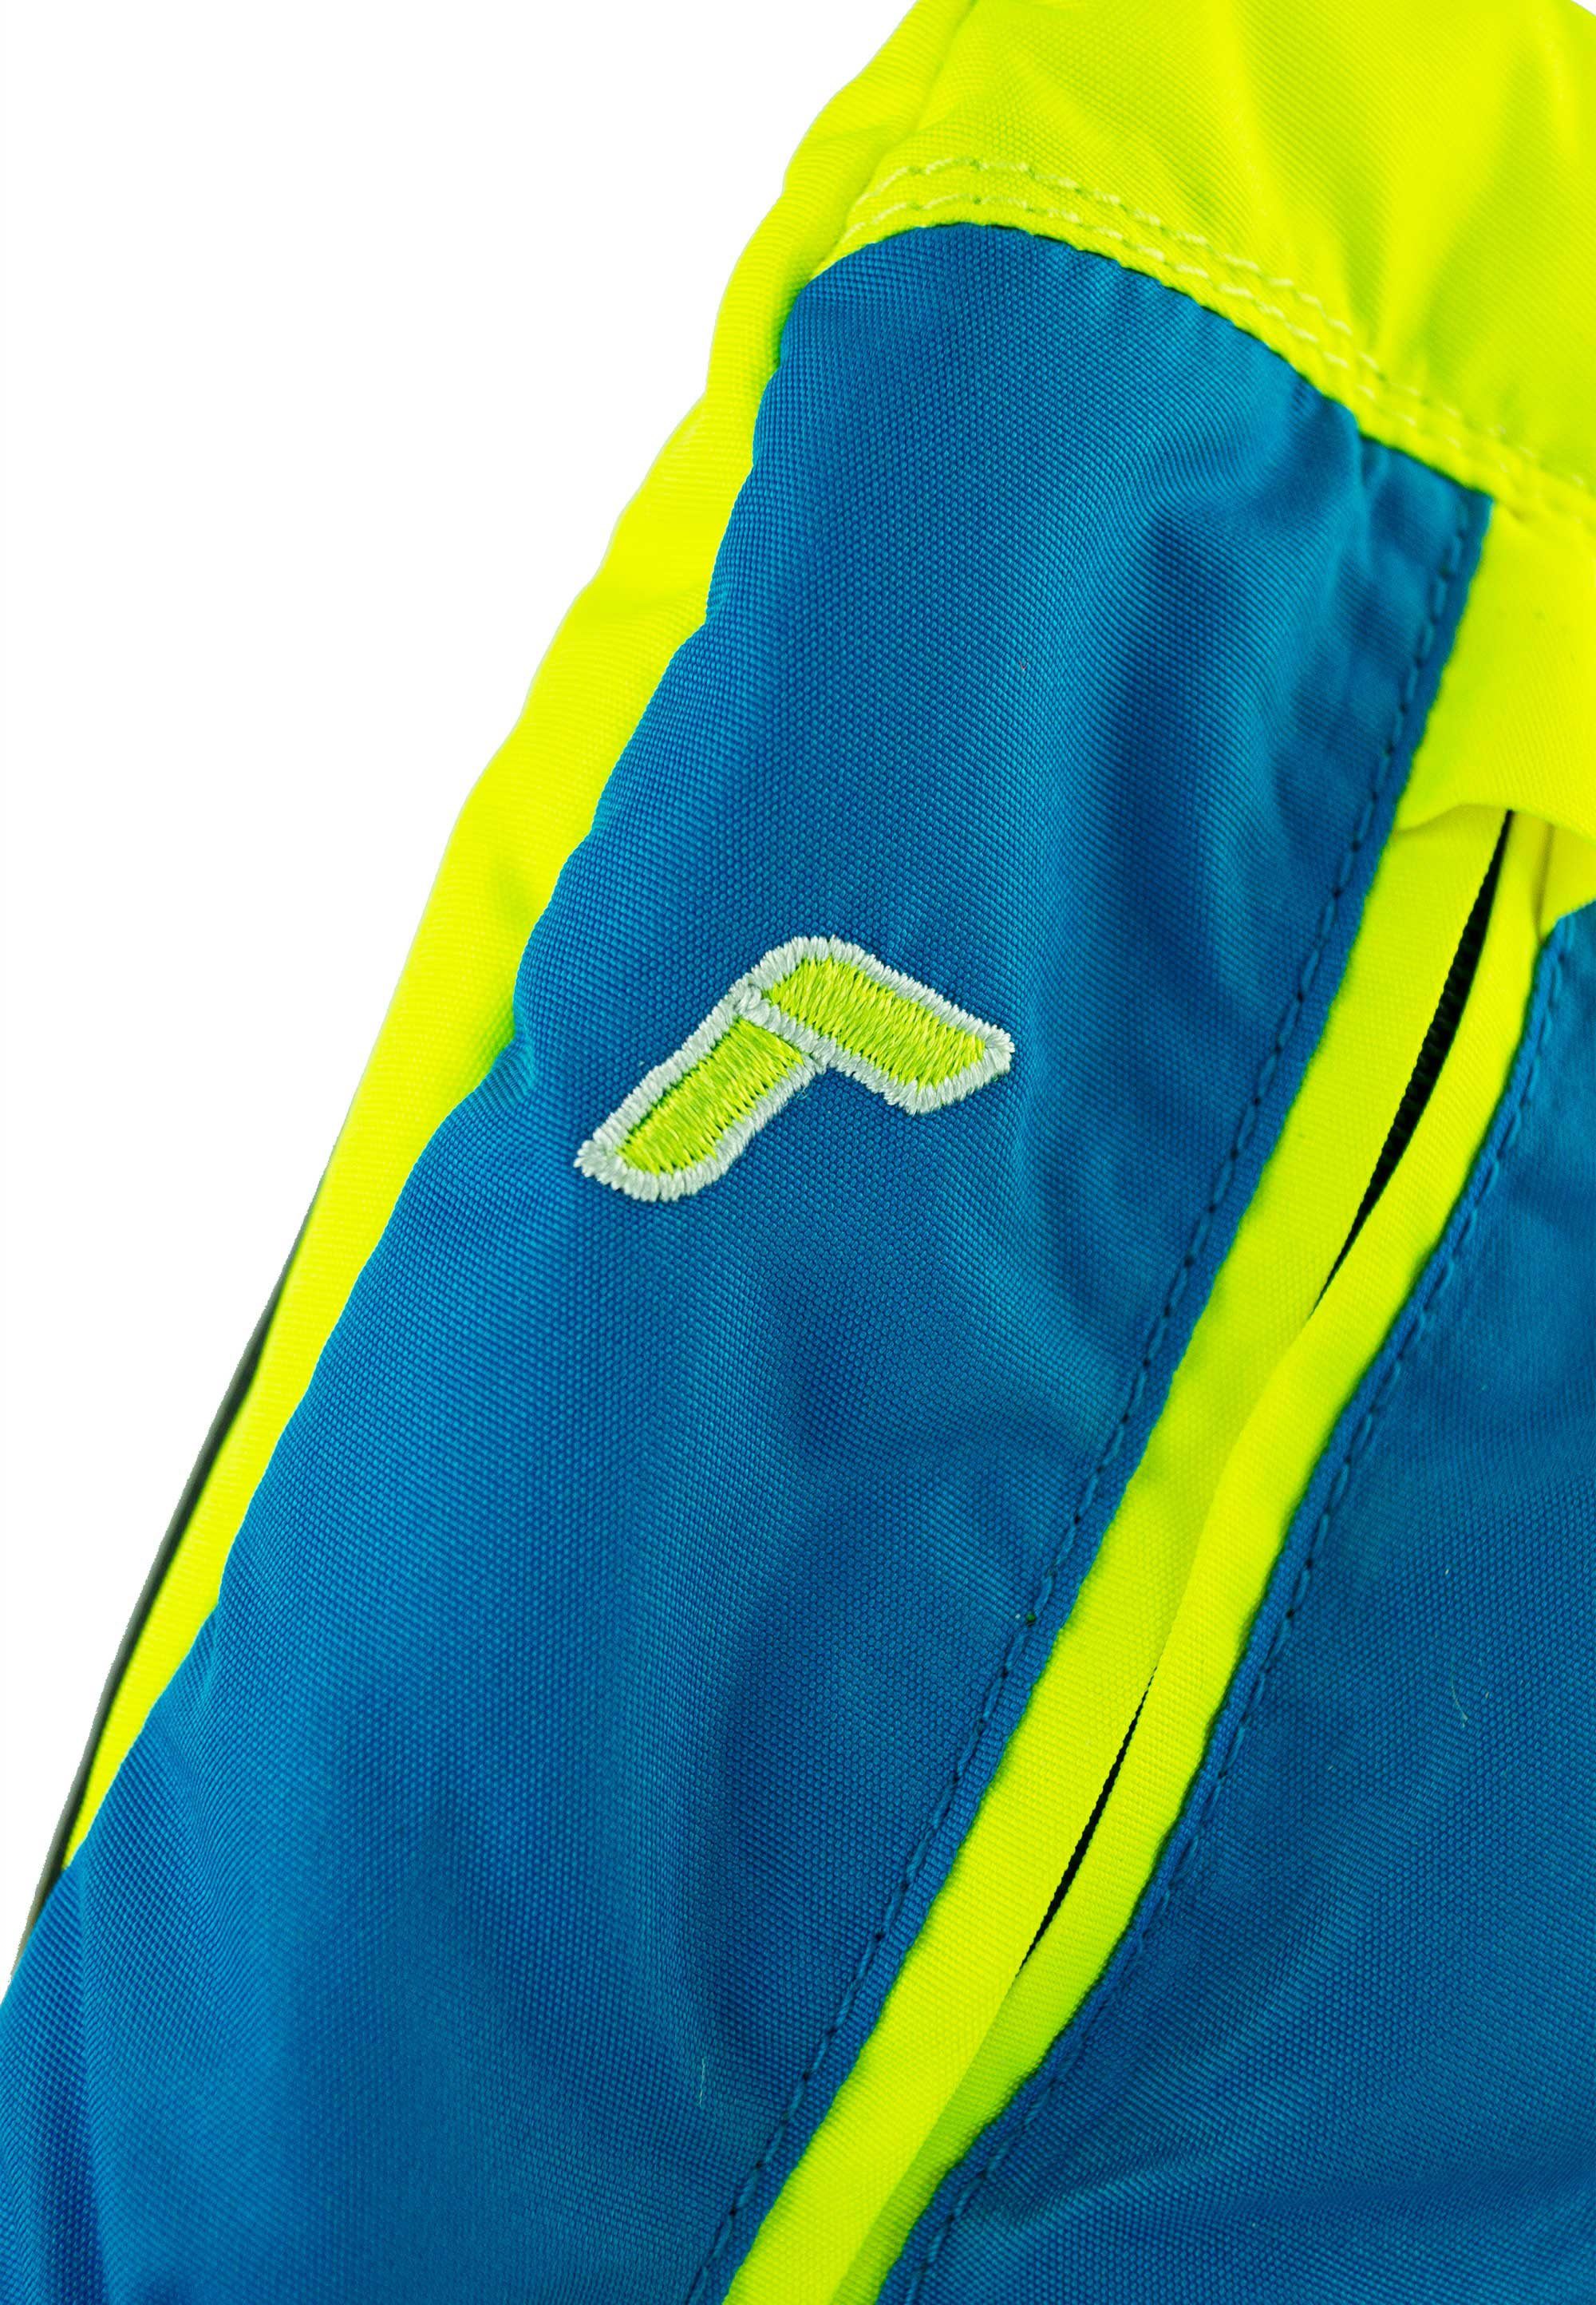 Material Tom gelb-blau atmungsaktivem Fäustlinge Mitten Reusch extra aus